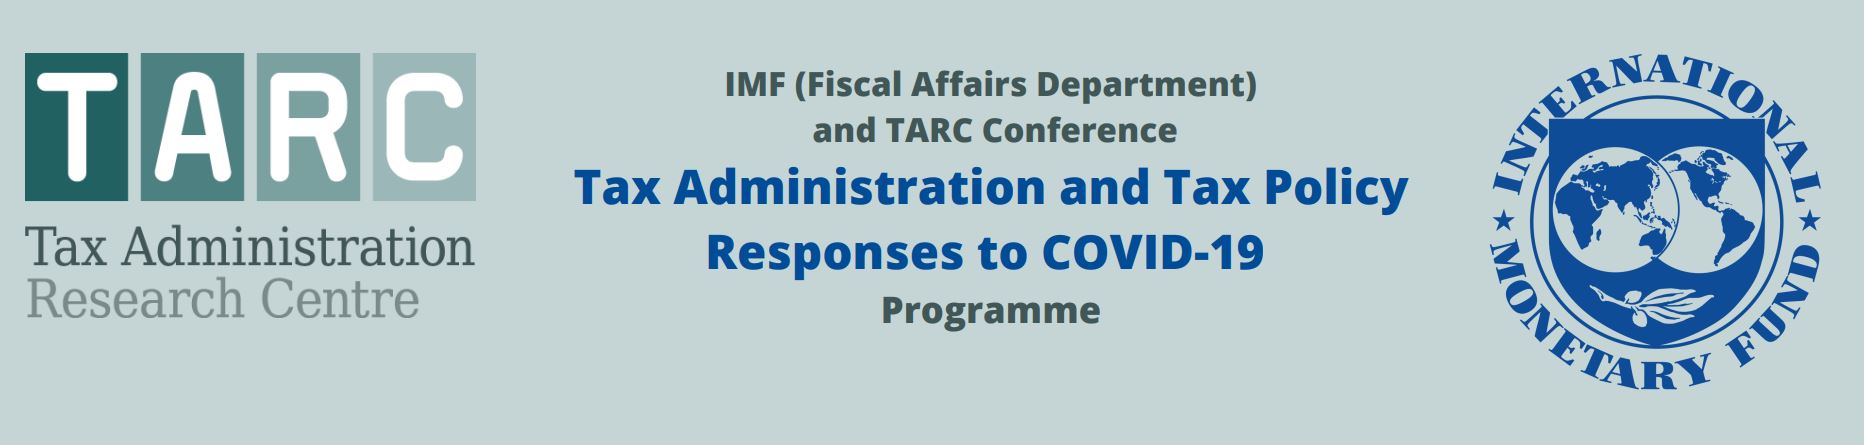 IMF-TARC Programme Image